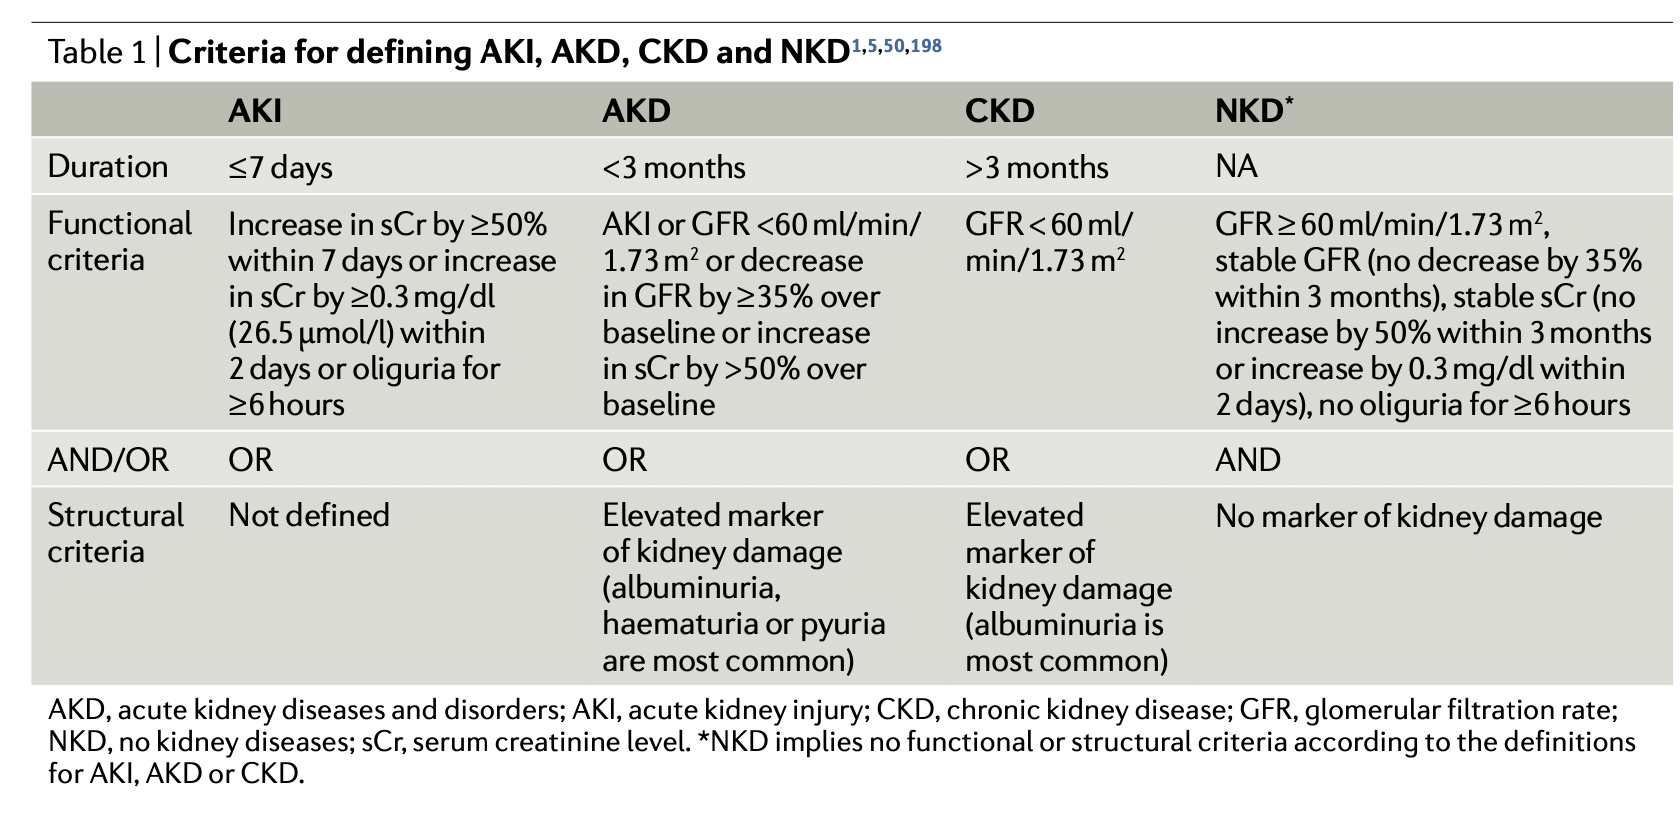 How do we define AKI, AKD, CKD and NKD